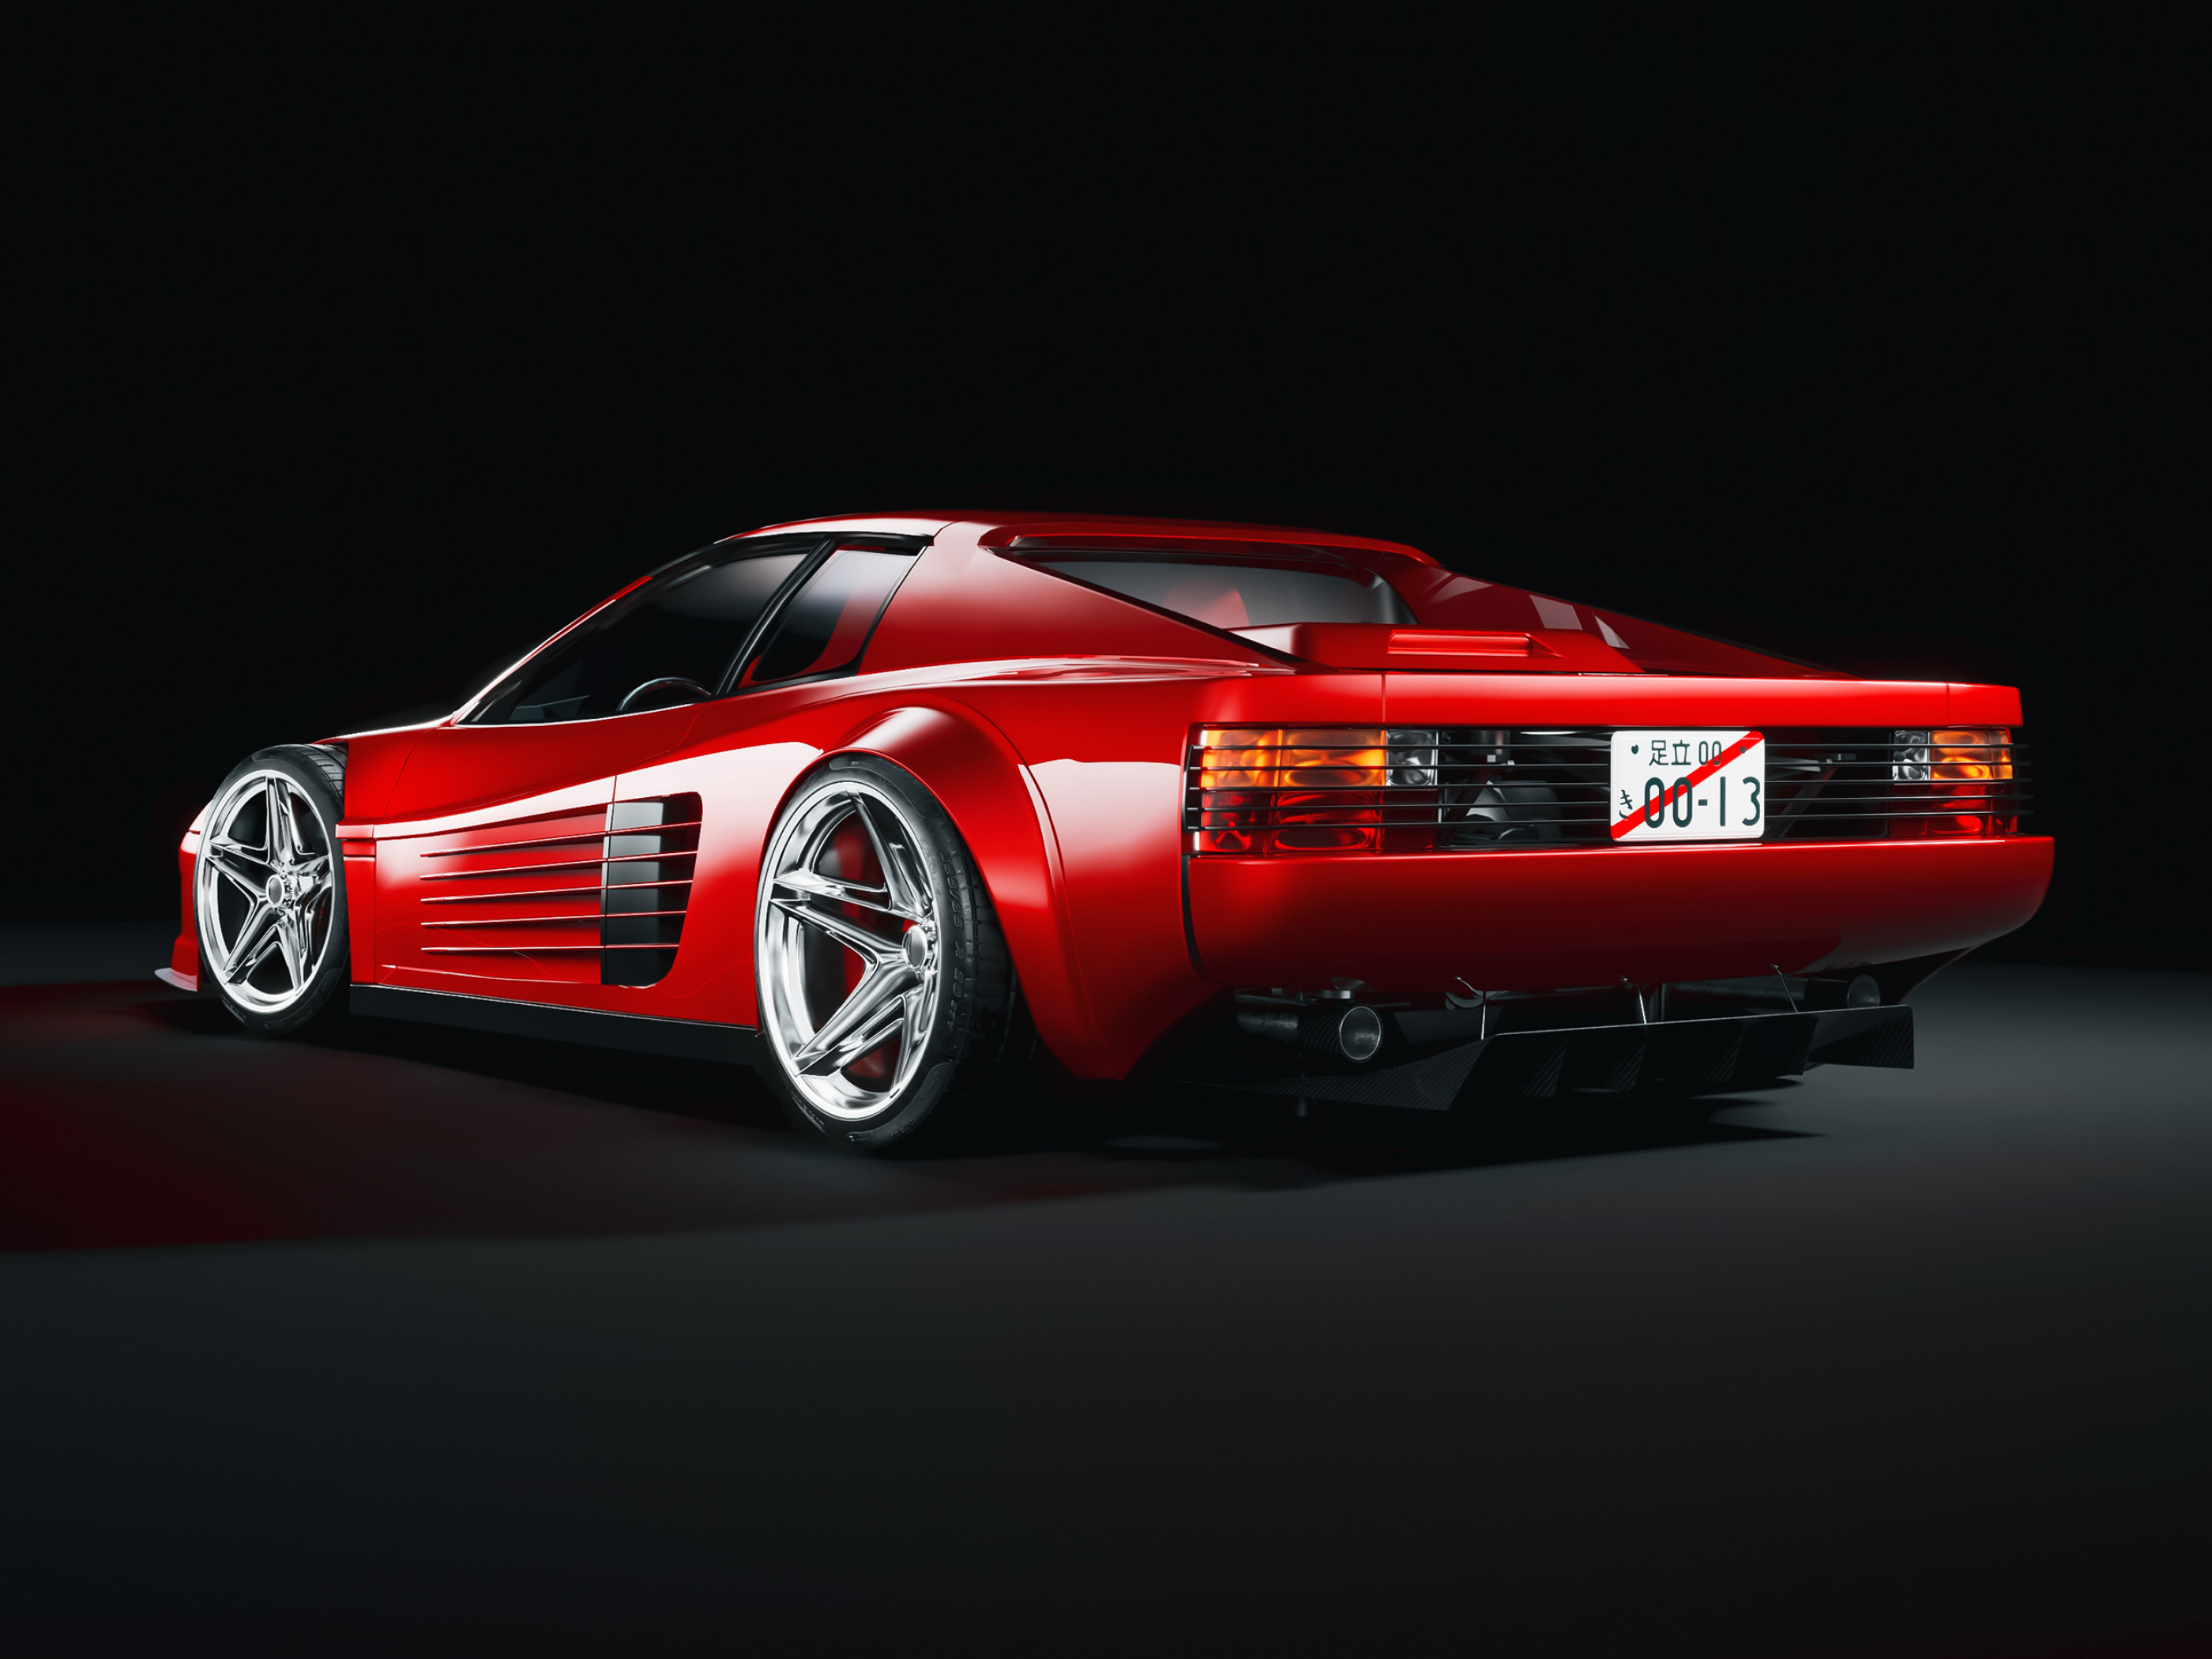 2800x2100 Wallpaper : Ferrari Testarossa, concept art, concept cars, digital art, render, artwork, red cars, car, vehicle, supercars, italian cars FGO2020 2110461 HD Wallpapers